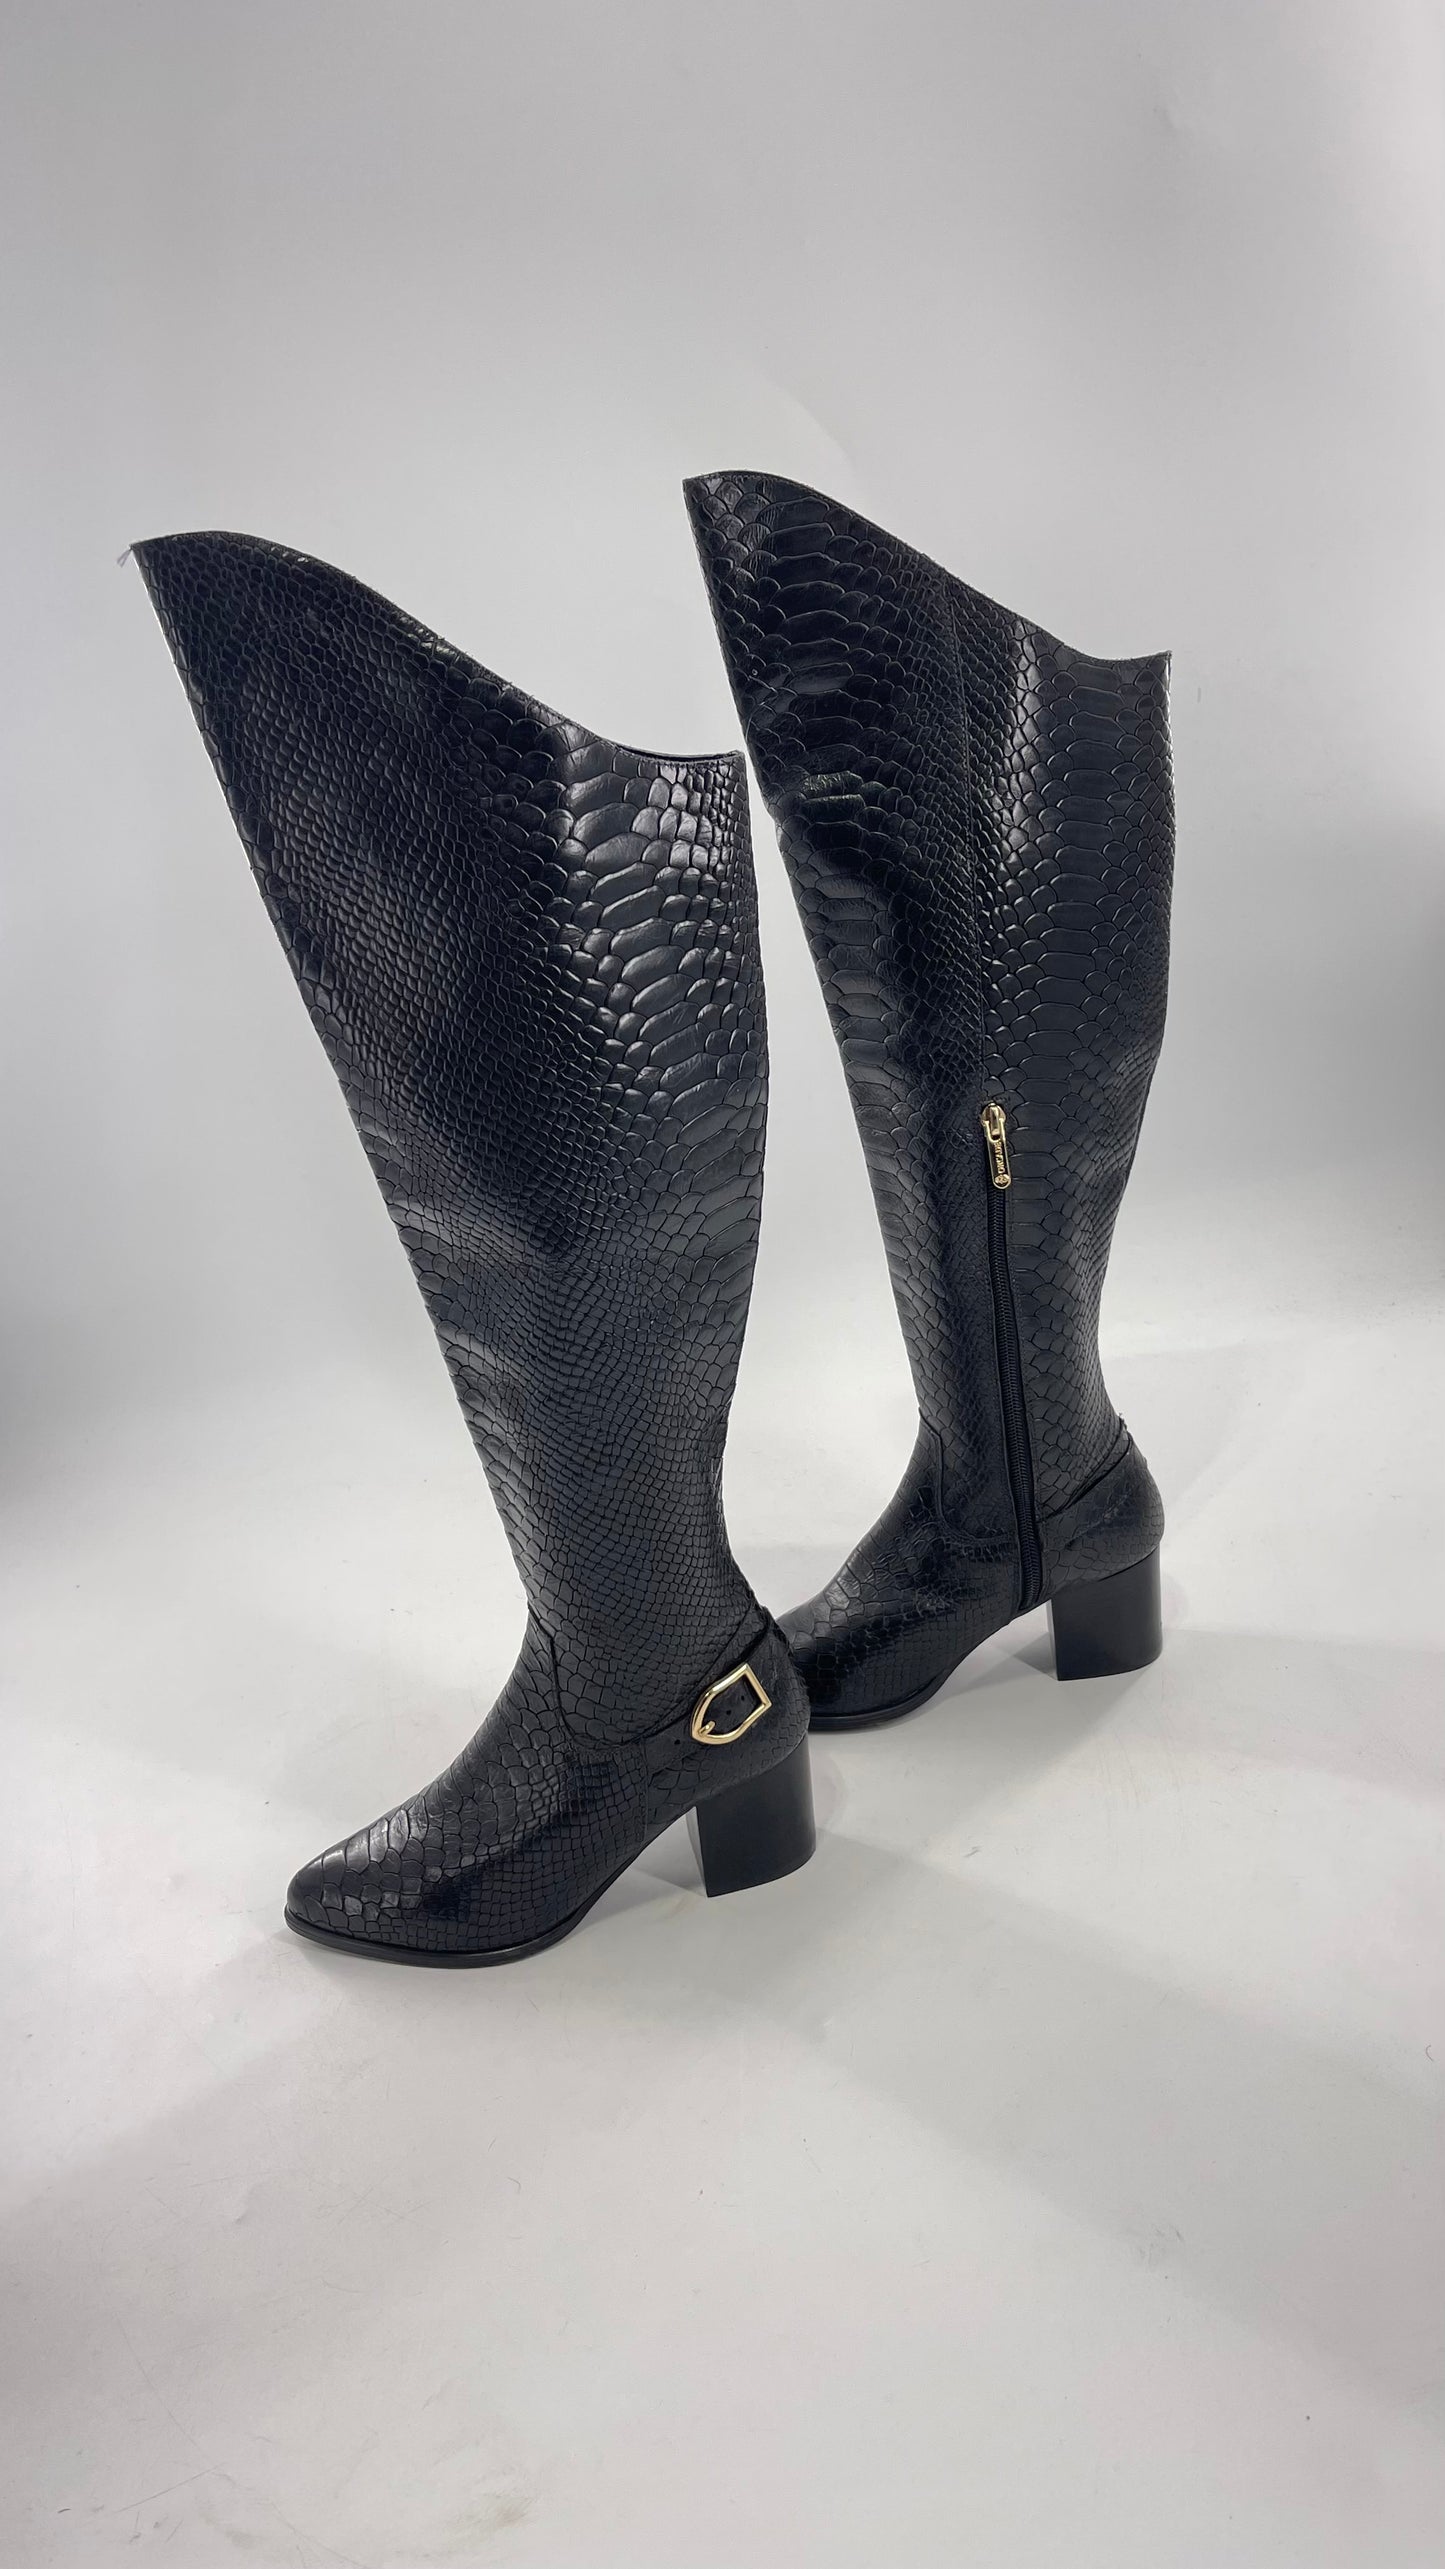 ORCADE Genuine Brazilian Leather Crocodile Embossed/Textured Knee High Boots (5)